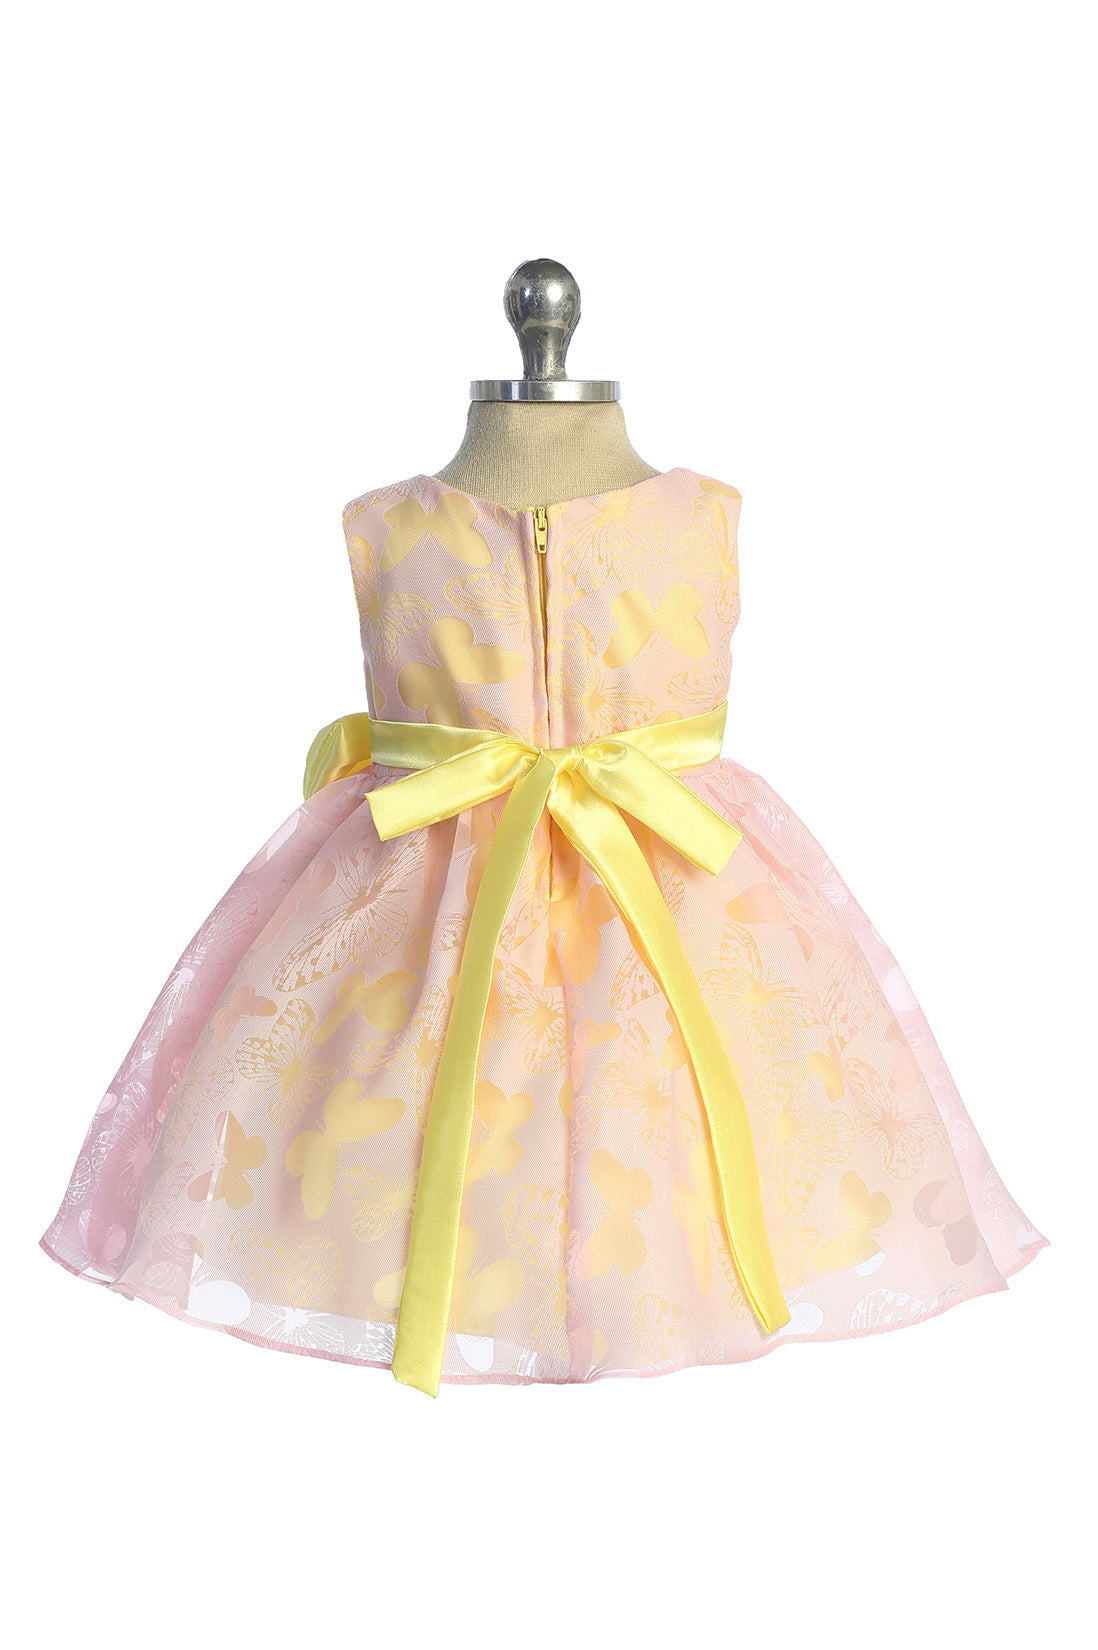 Dress - Butterfly Burnout Organza Baby Dress